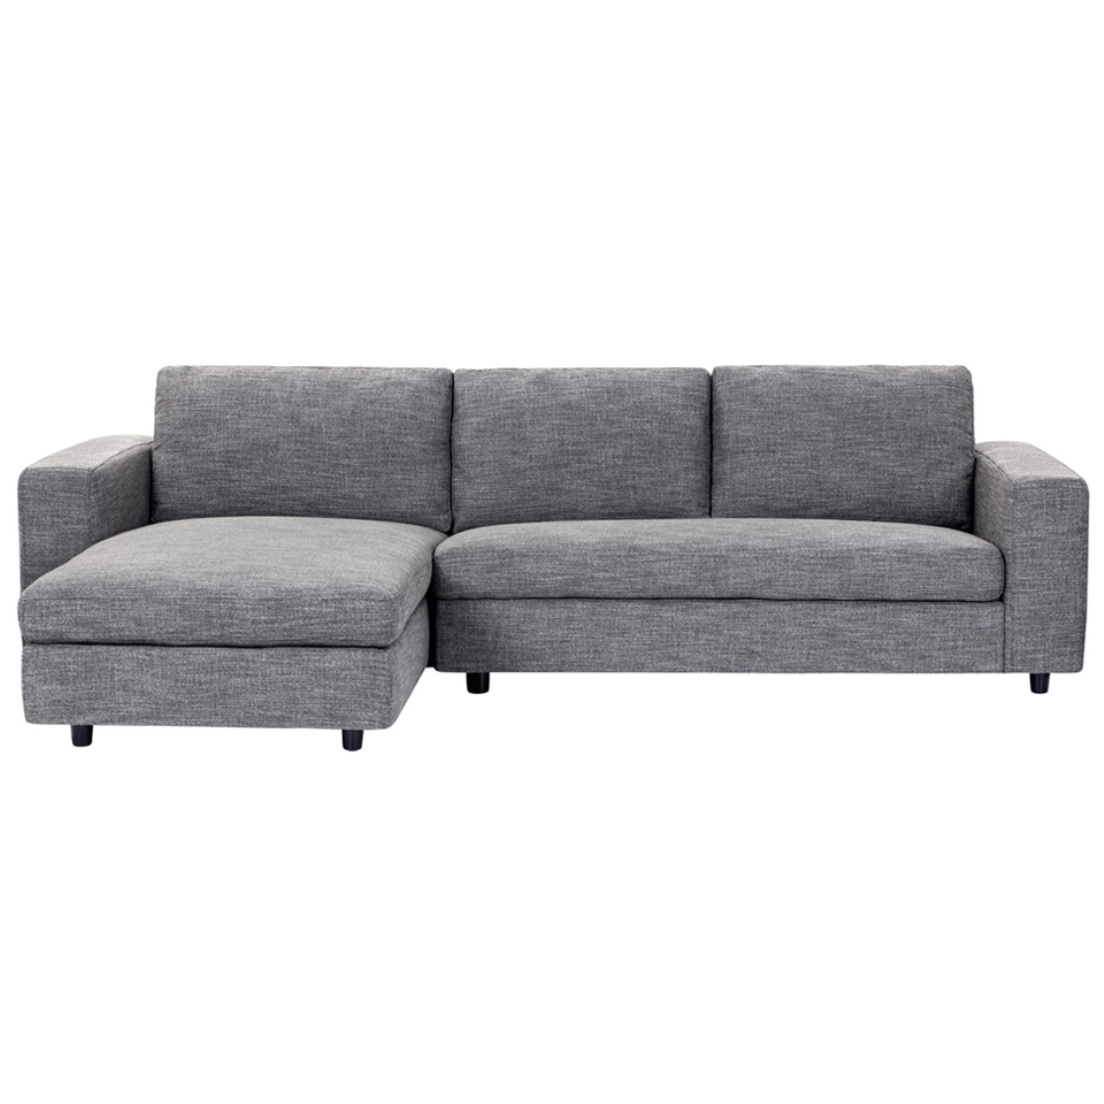 Ethan Quarry Grey Sofa Chaise